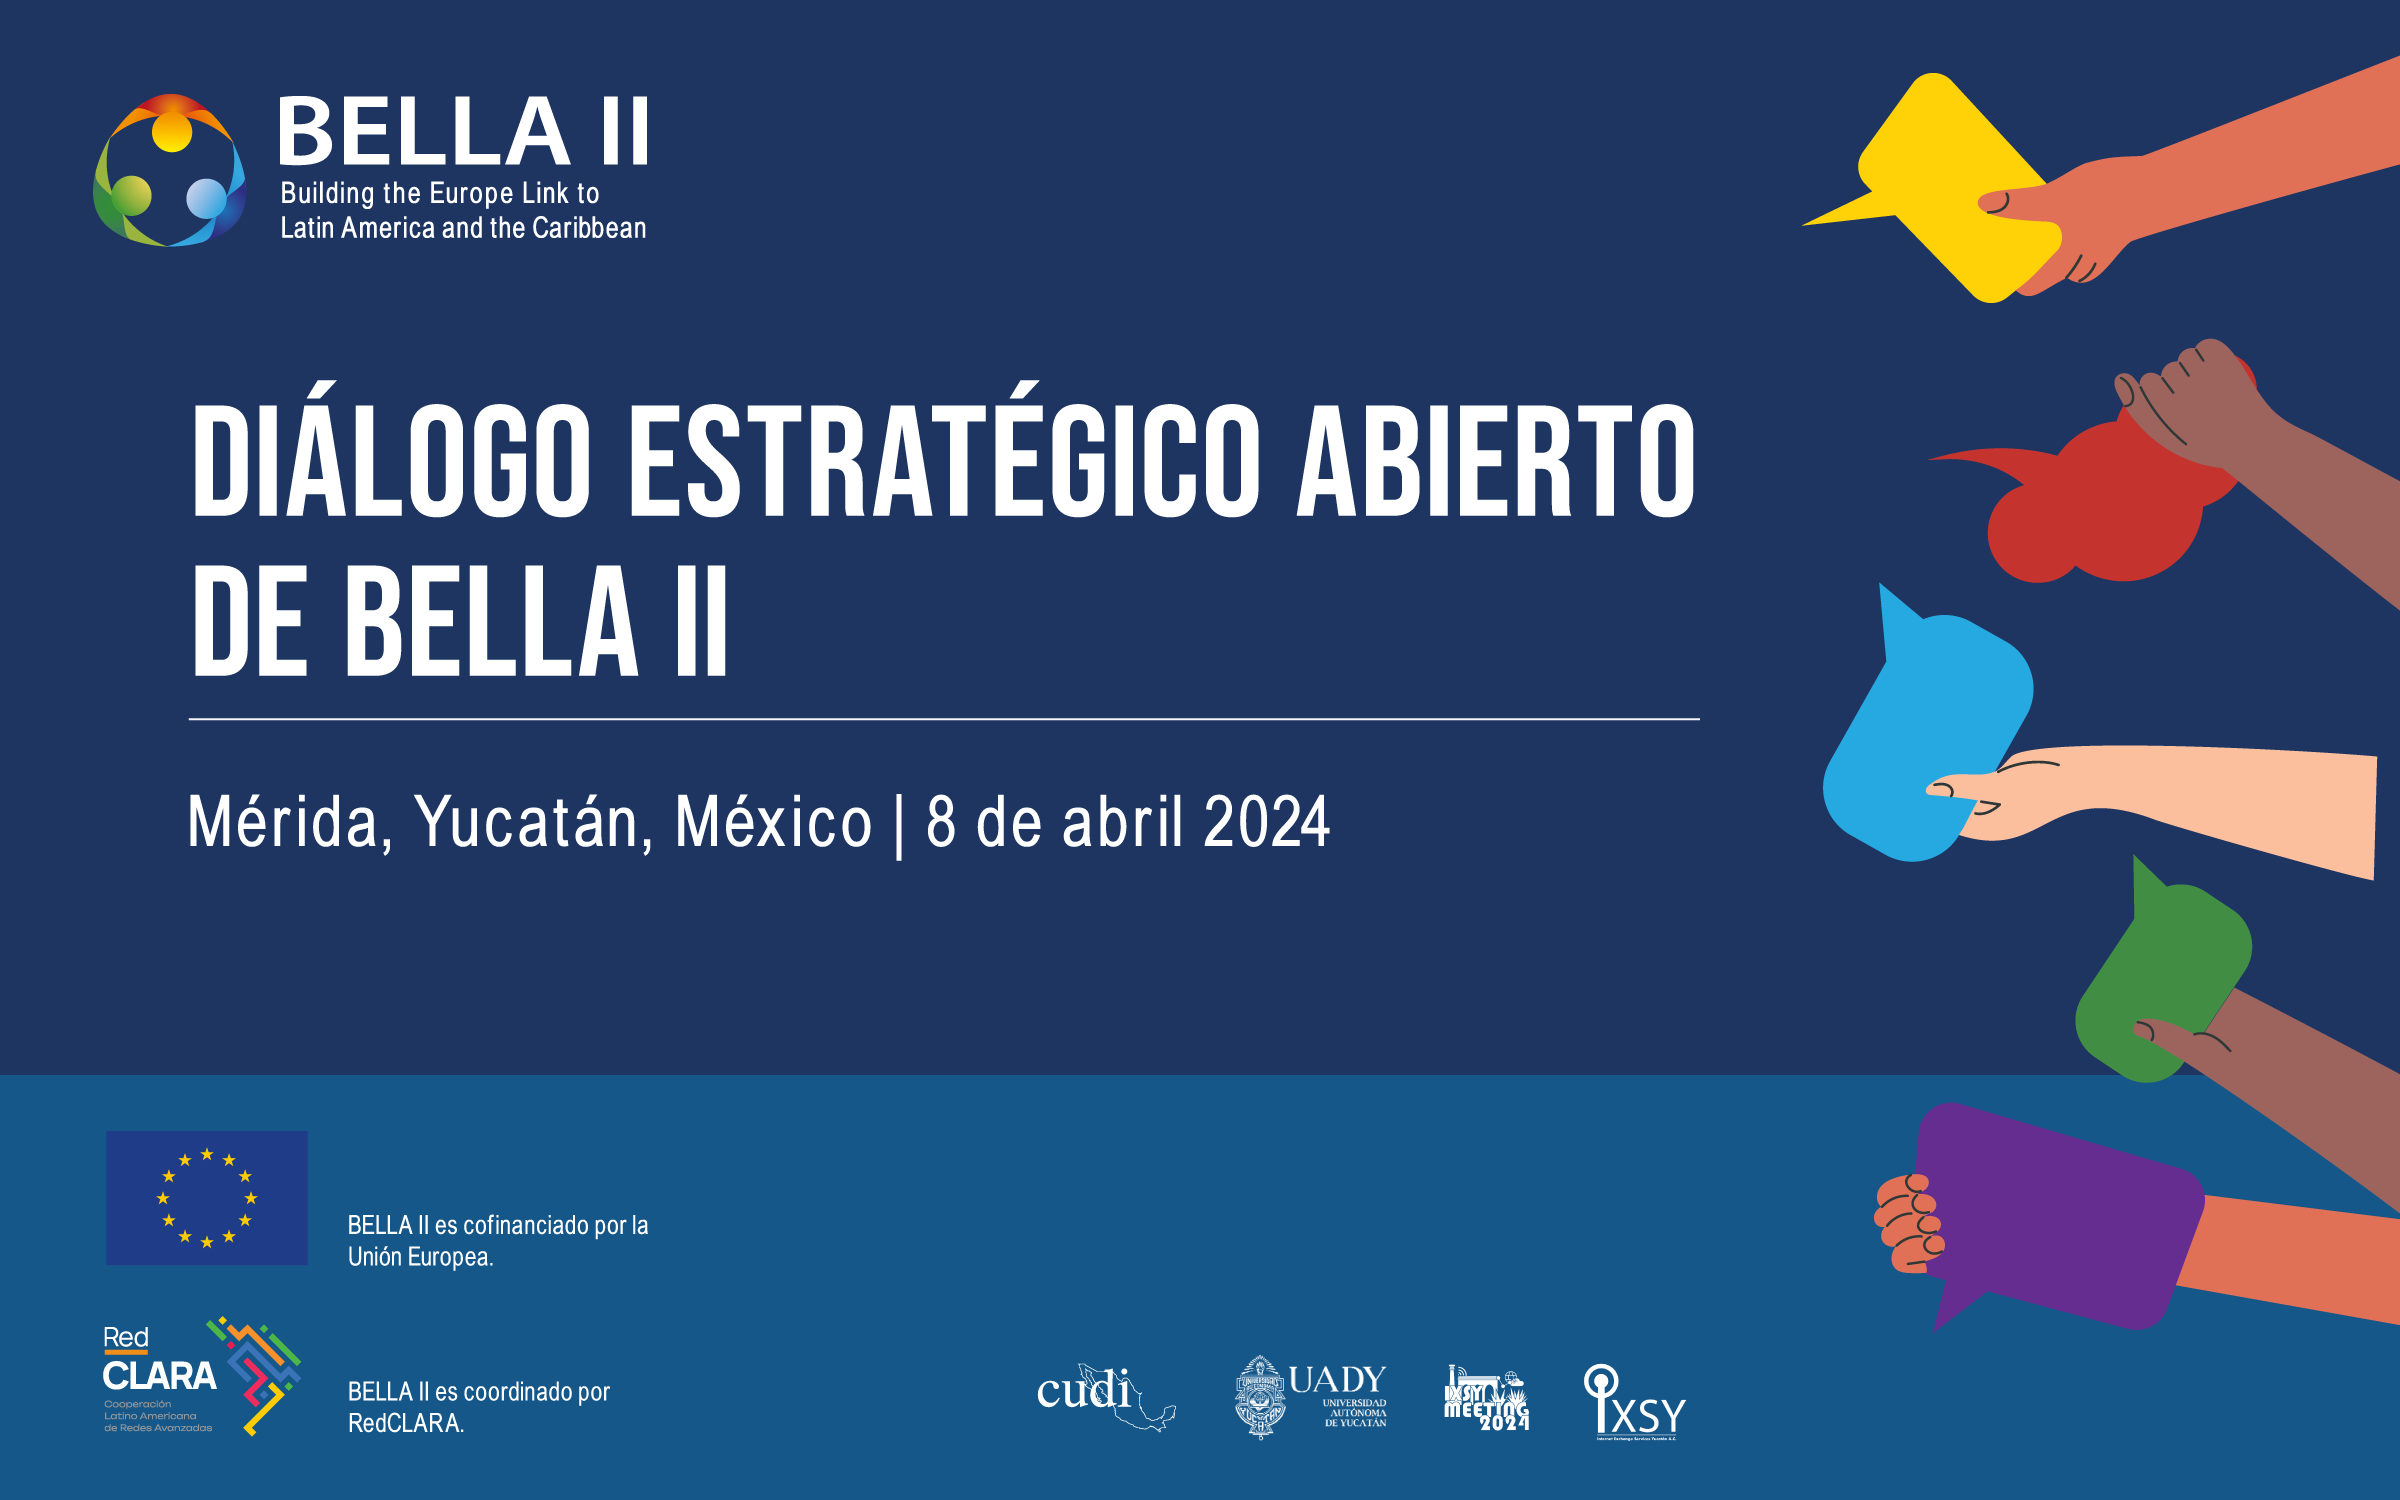 Mexico hosts next BELLA II strategic dialogue